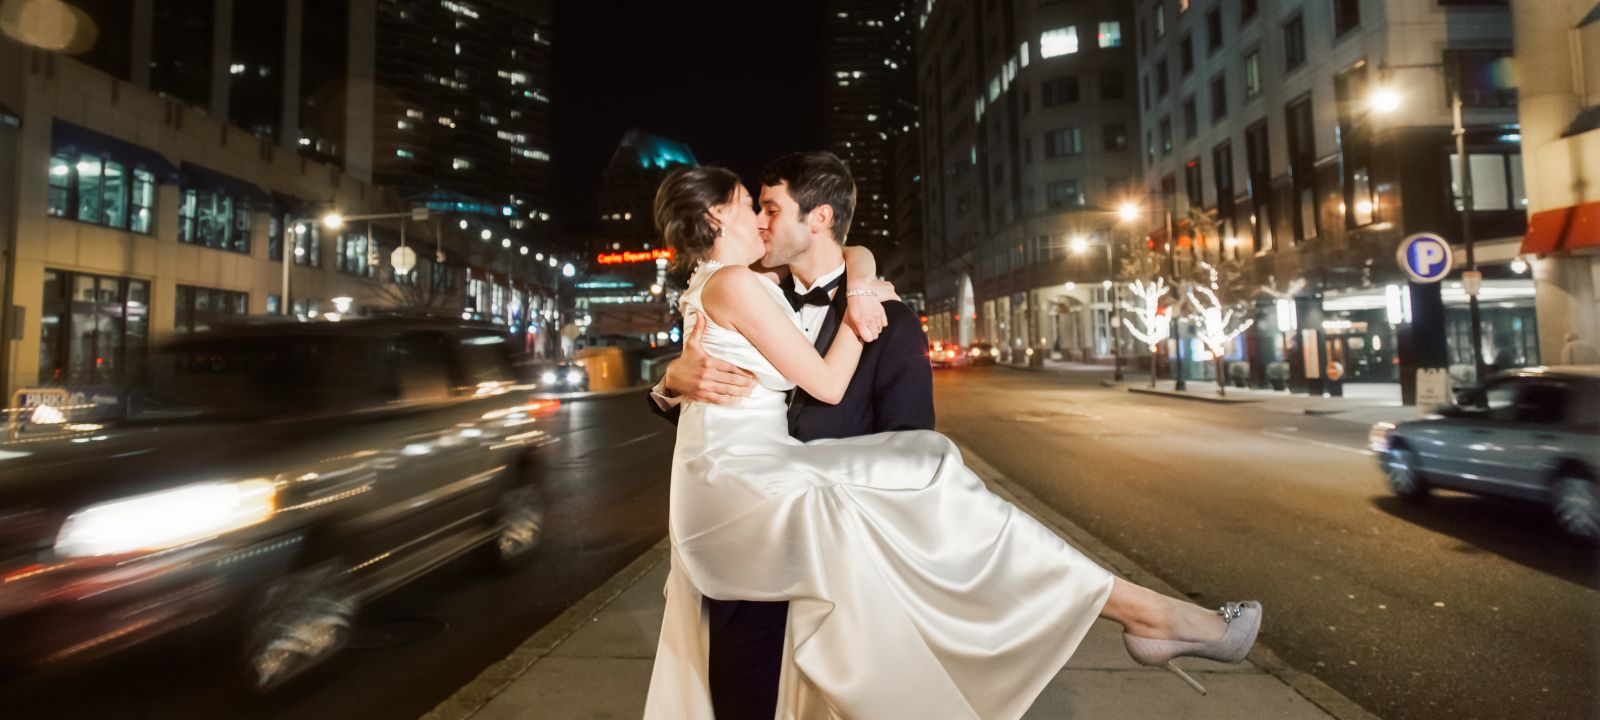 Bridge and groom kissing on street at night